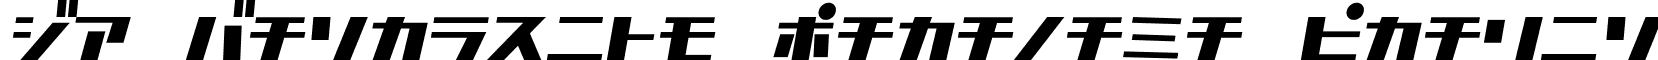 D3 Factorism Katakana Italic font - D3FactorismKI.ttf